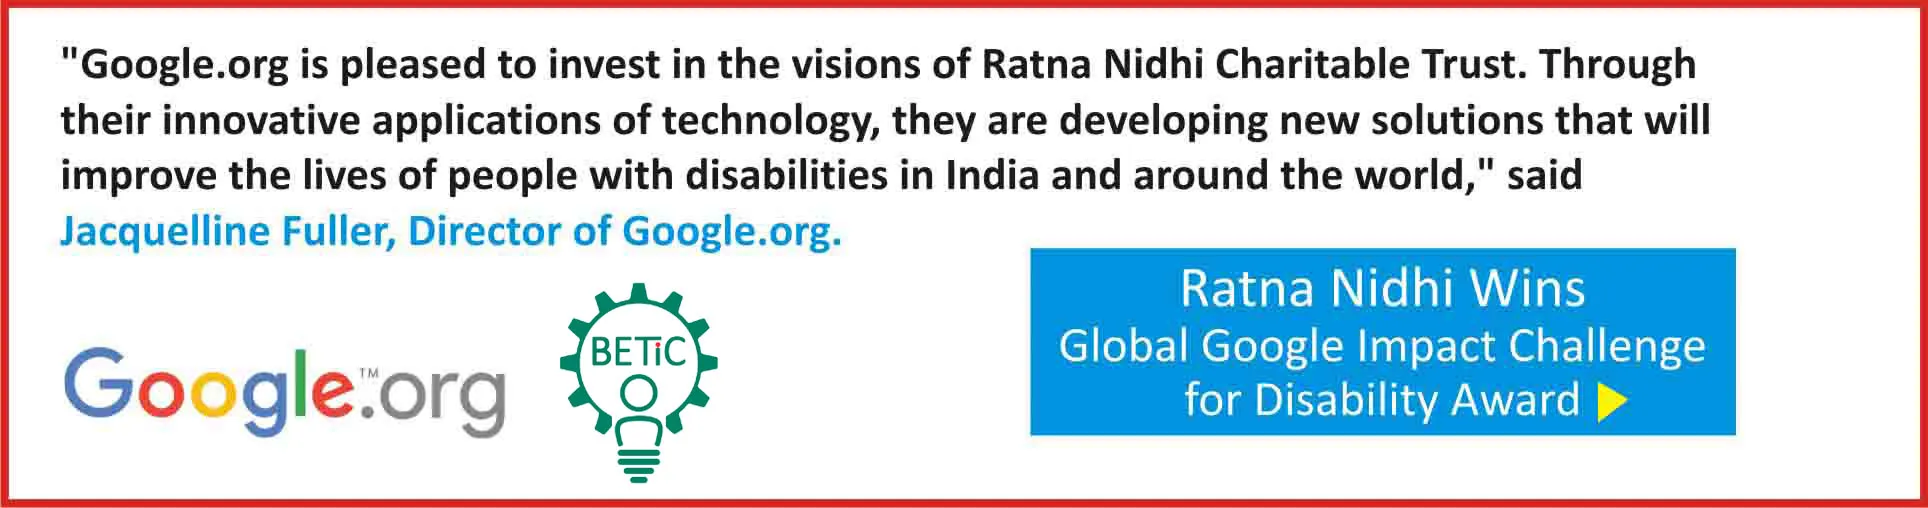 Global Google Impact Challenge For Disability Award